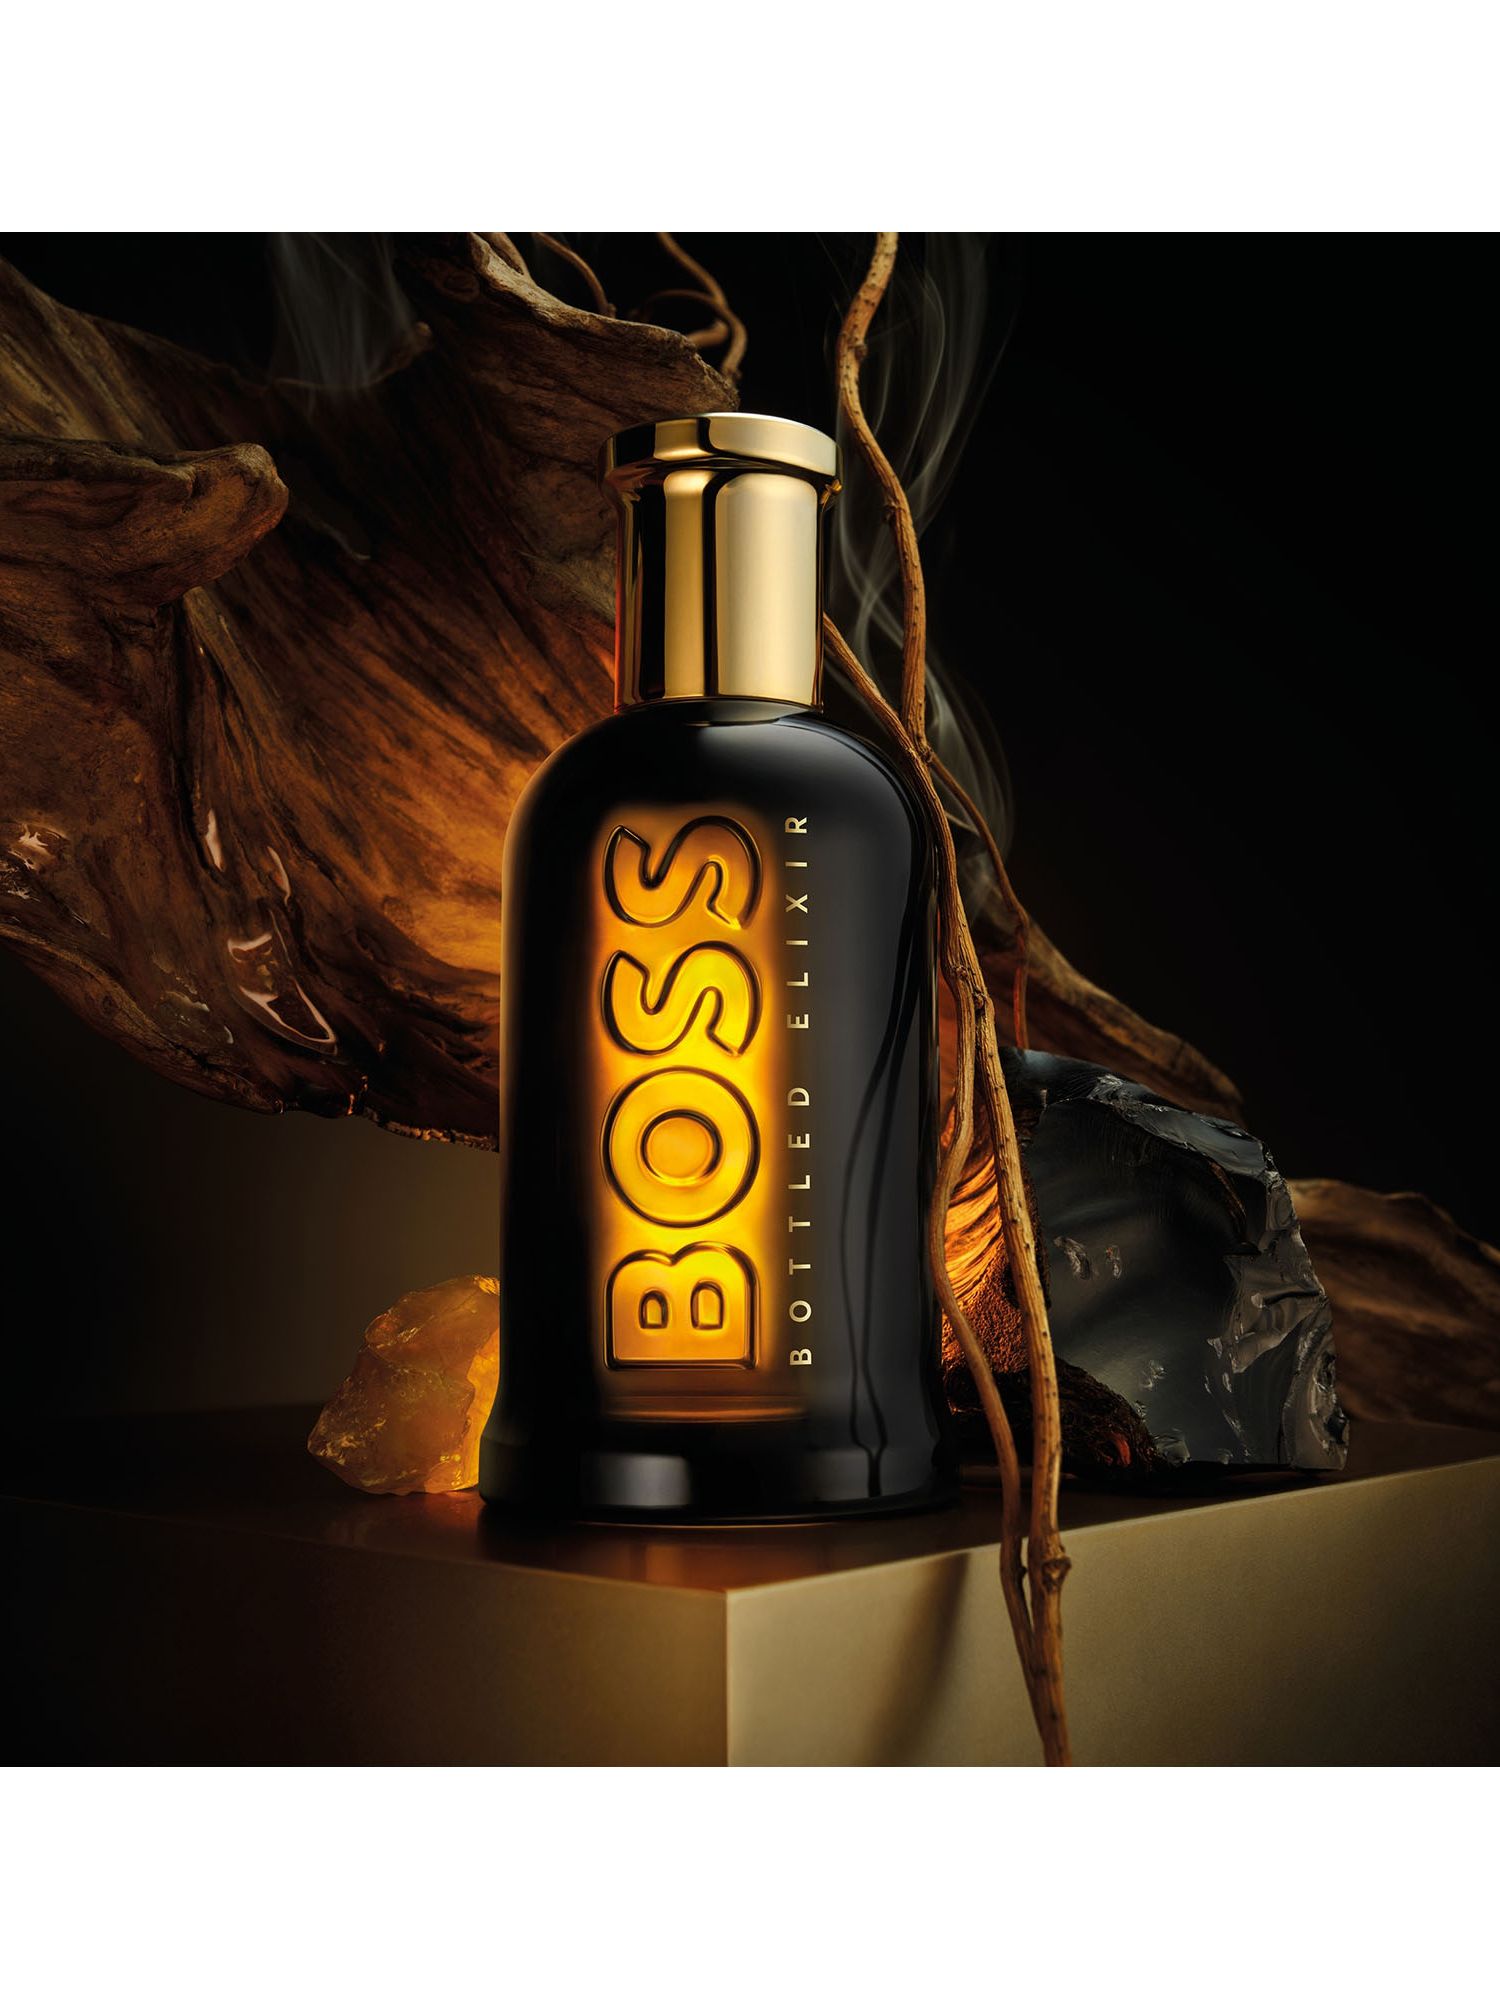 HUGO BOSS BOSS Bottled Elixir Parfum Intense, 50ml 3